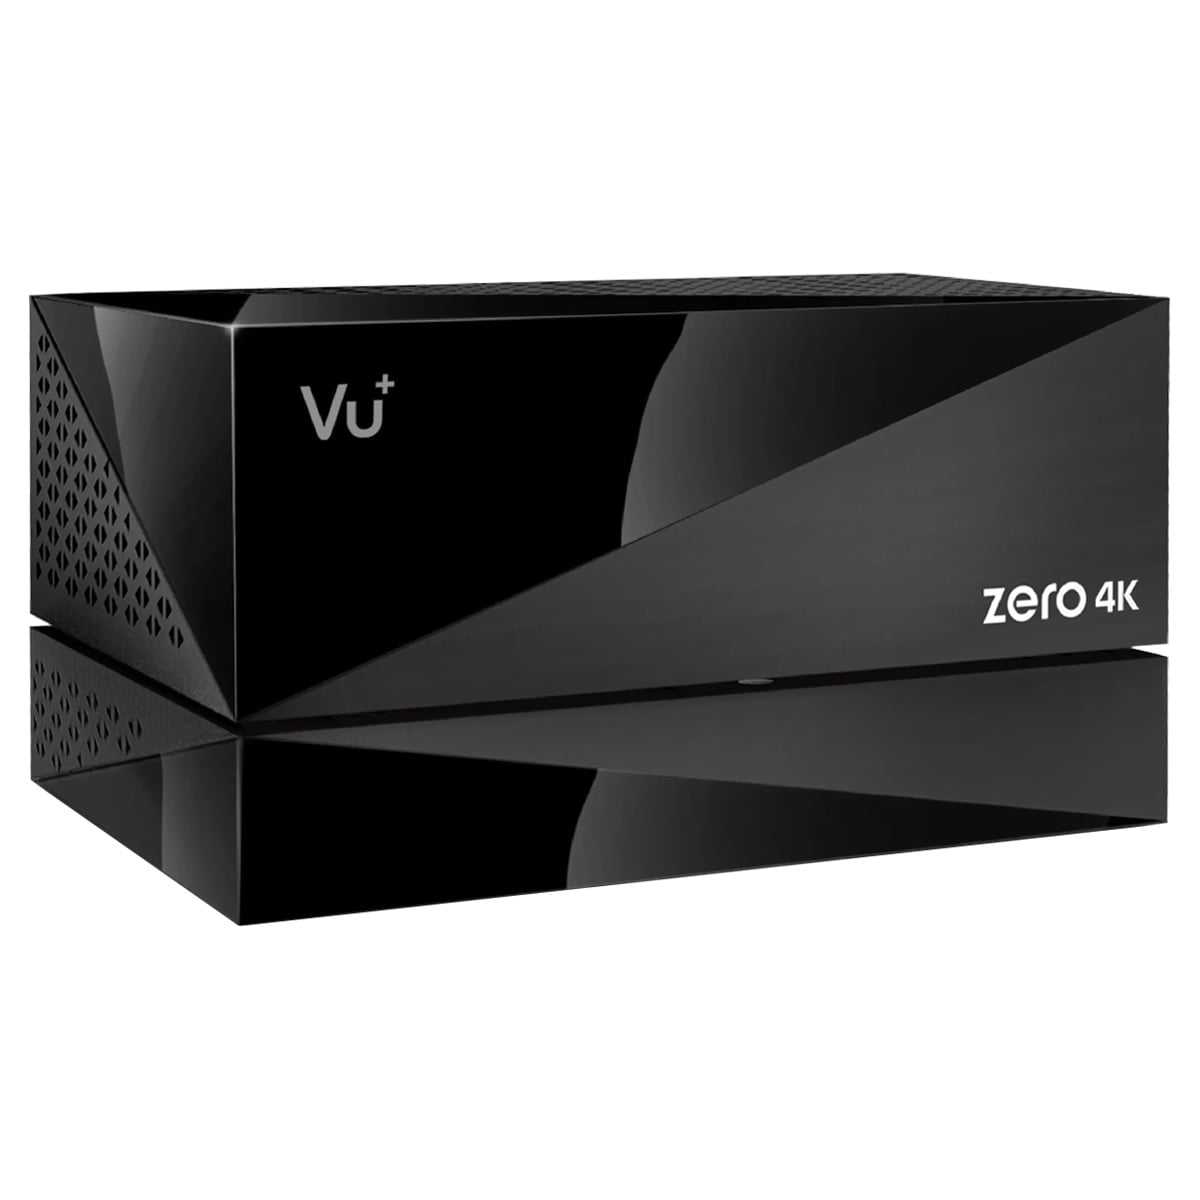 VU+ Plus Zero 4K DVB-C/T2 Kabel Receiver inkl. PVR-Kit (UHD Linux HbbTV LAN) 2TB von VU+